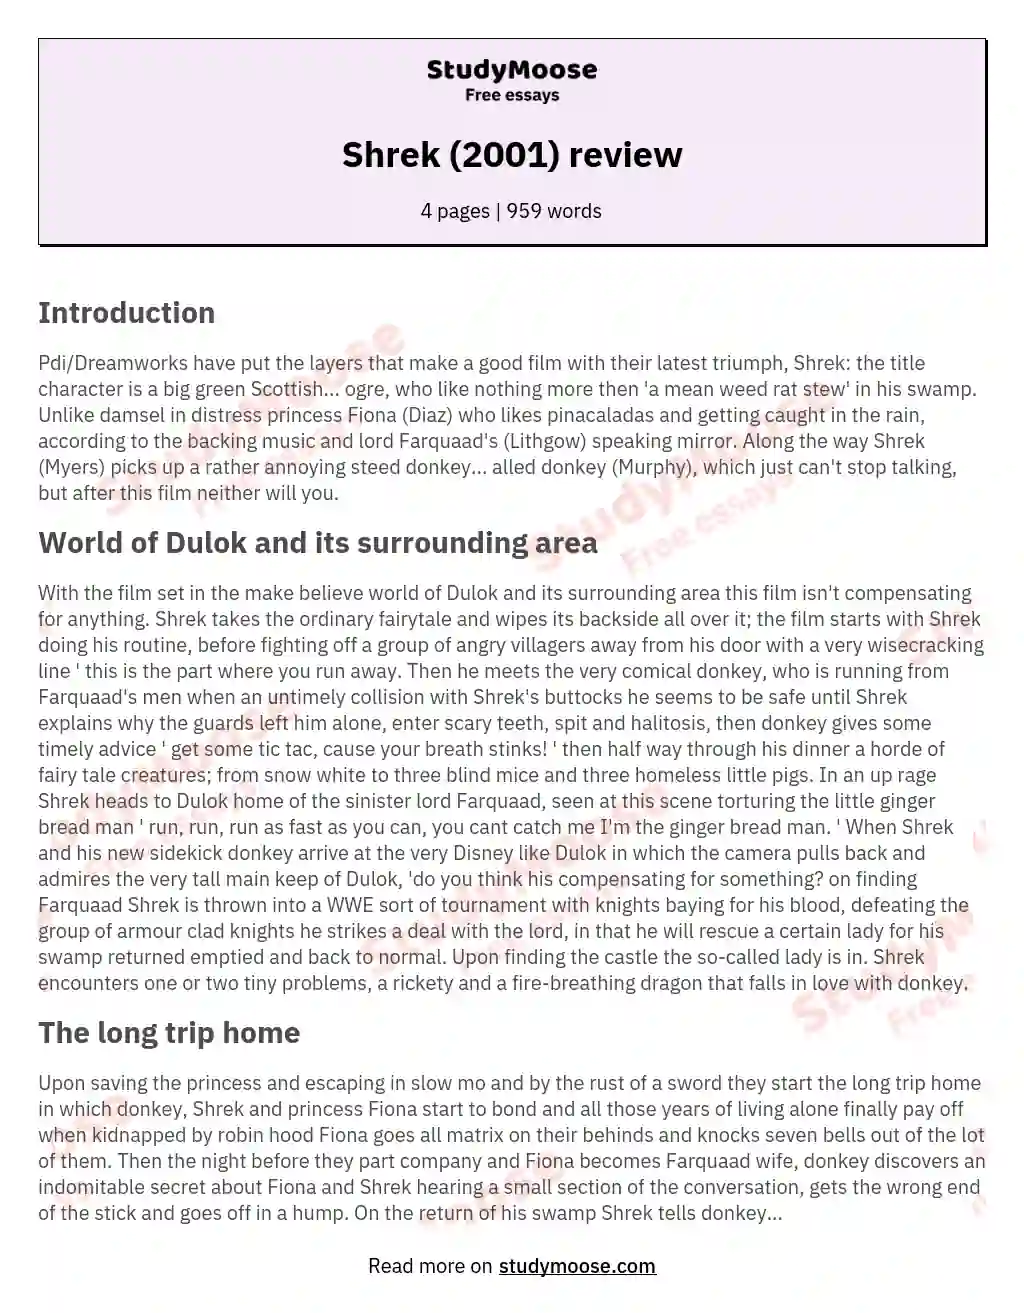 Shrek (2001) review essay